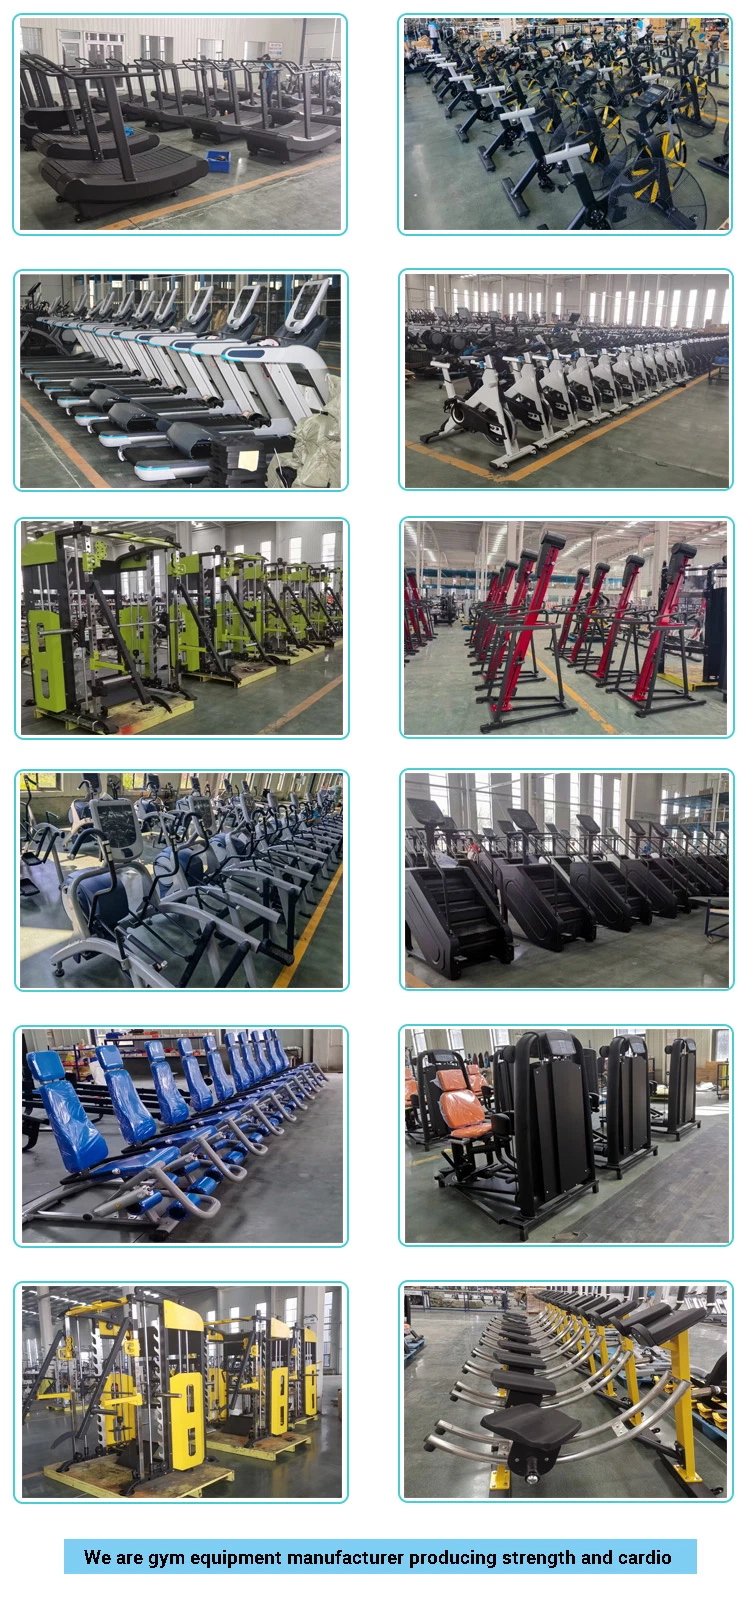 Gym Fitness Equipment Multiple Free Weight 15kg Set Adjustable Dumbbell